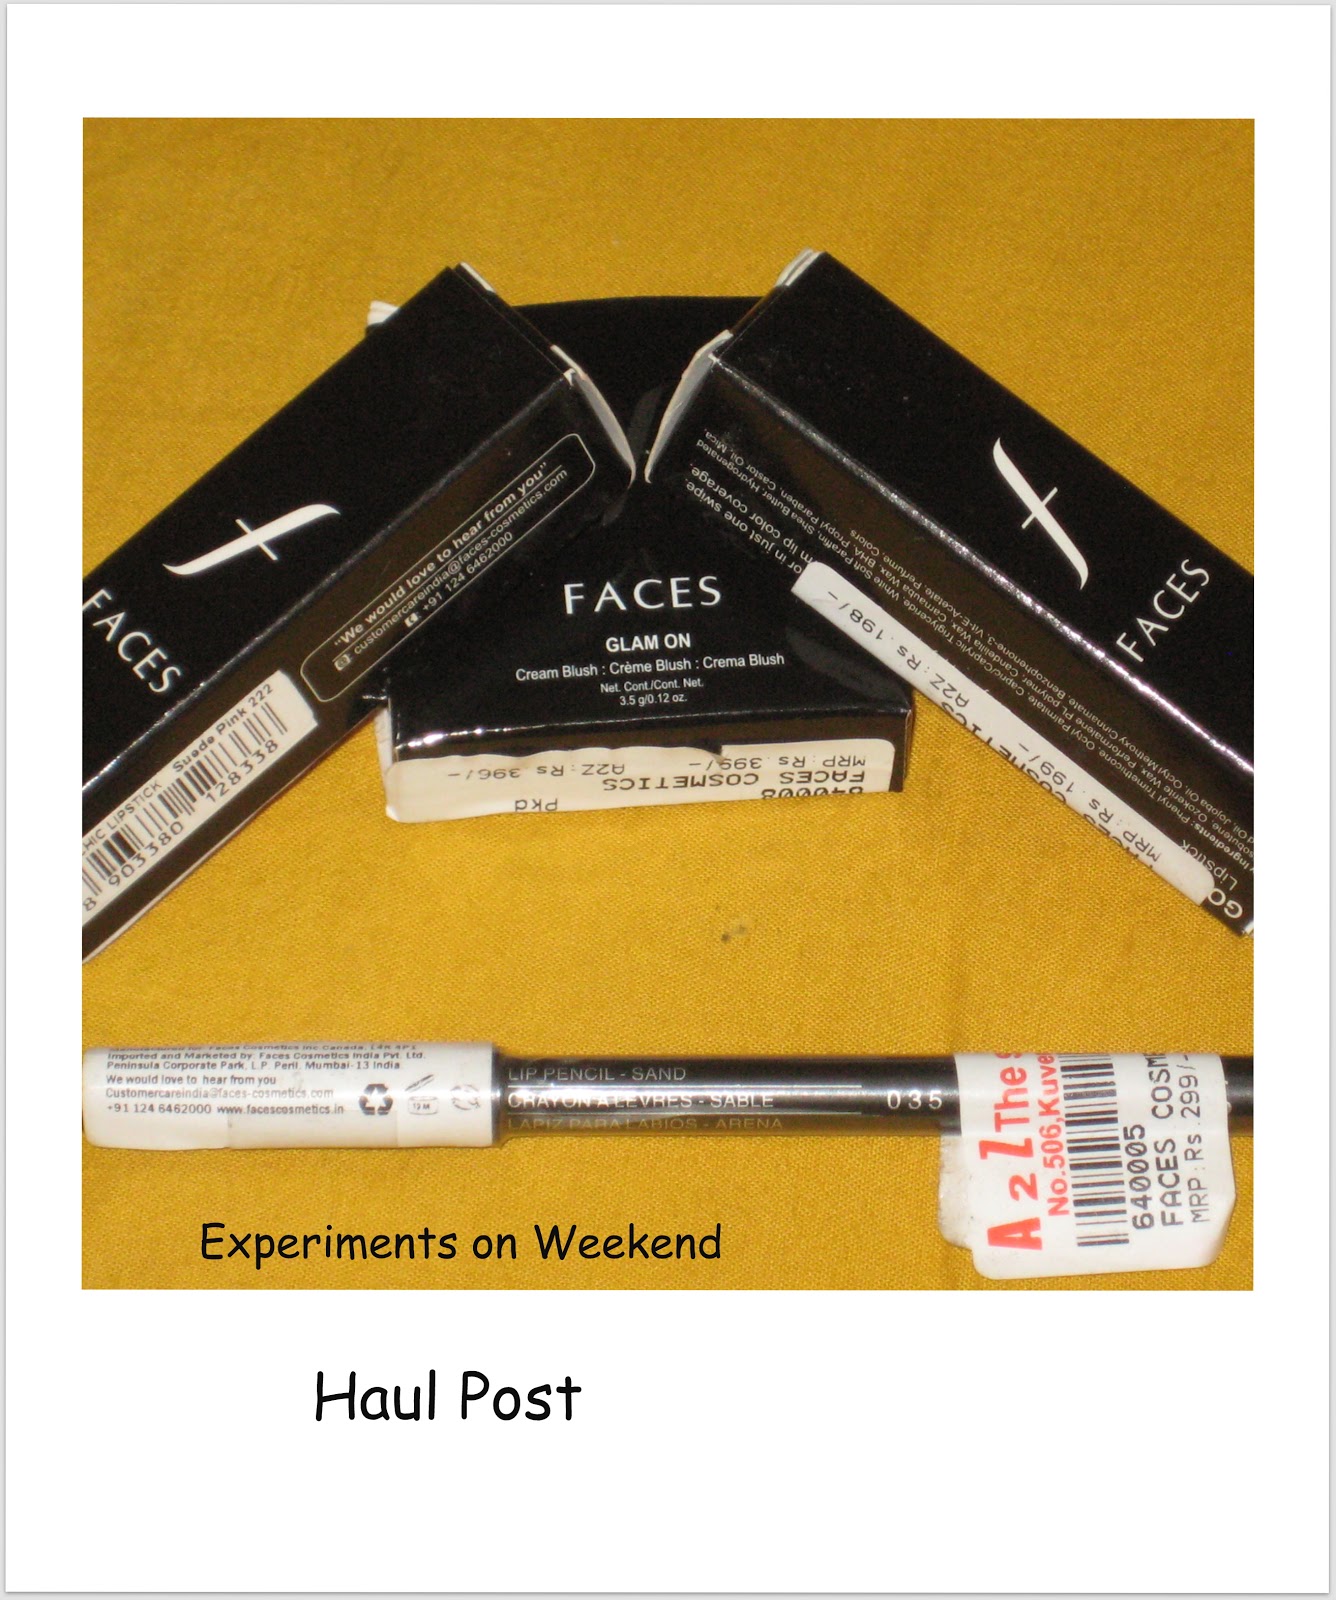 My Food Affairs: Makeup Haul Post: Oct 2012